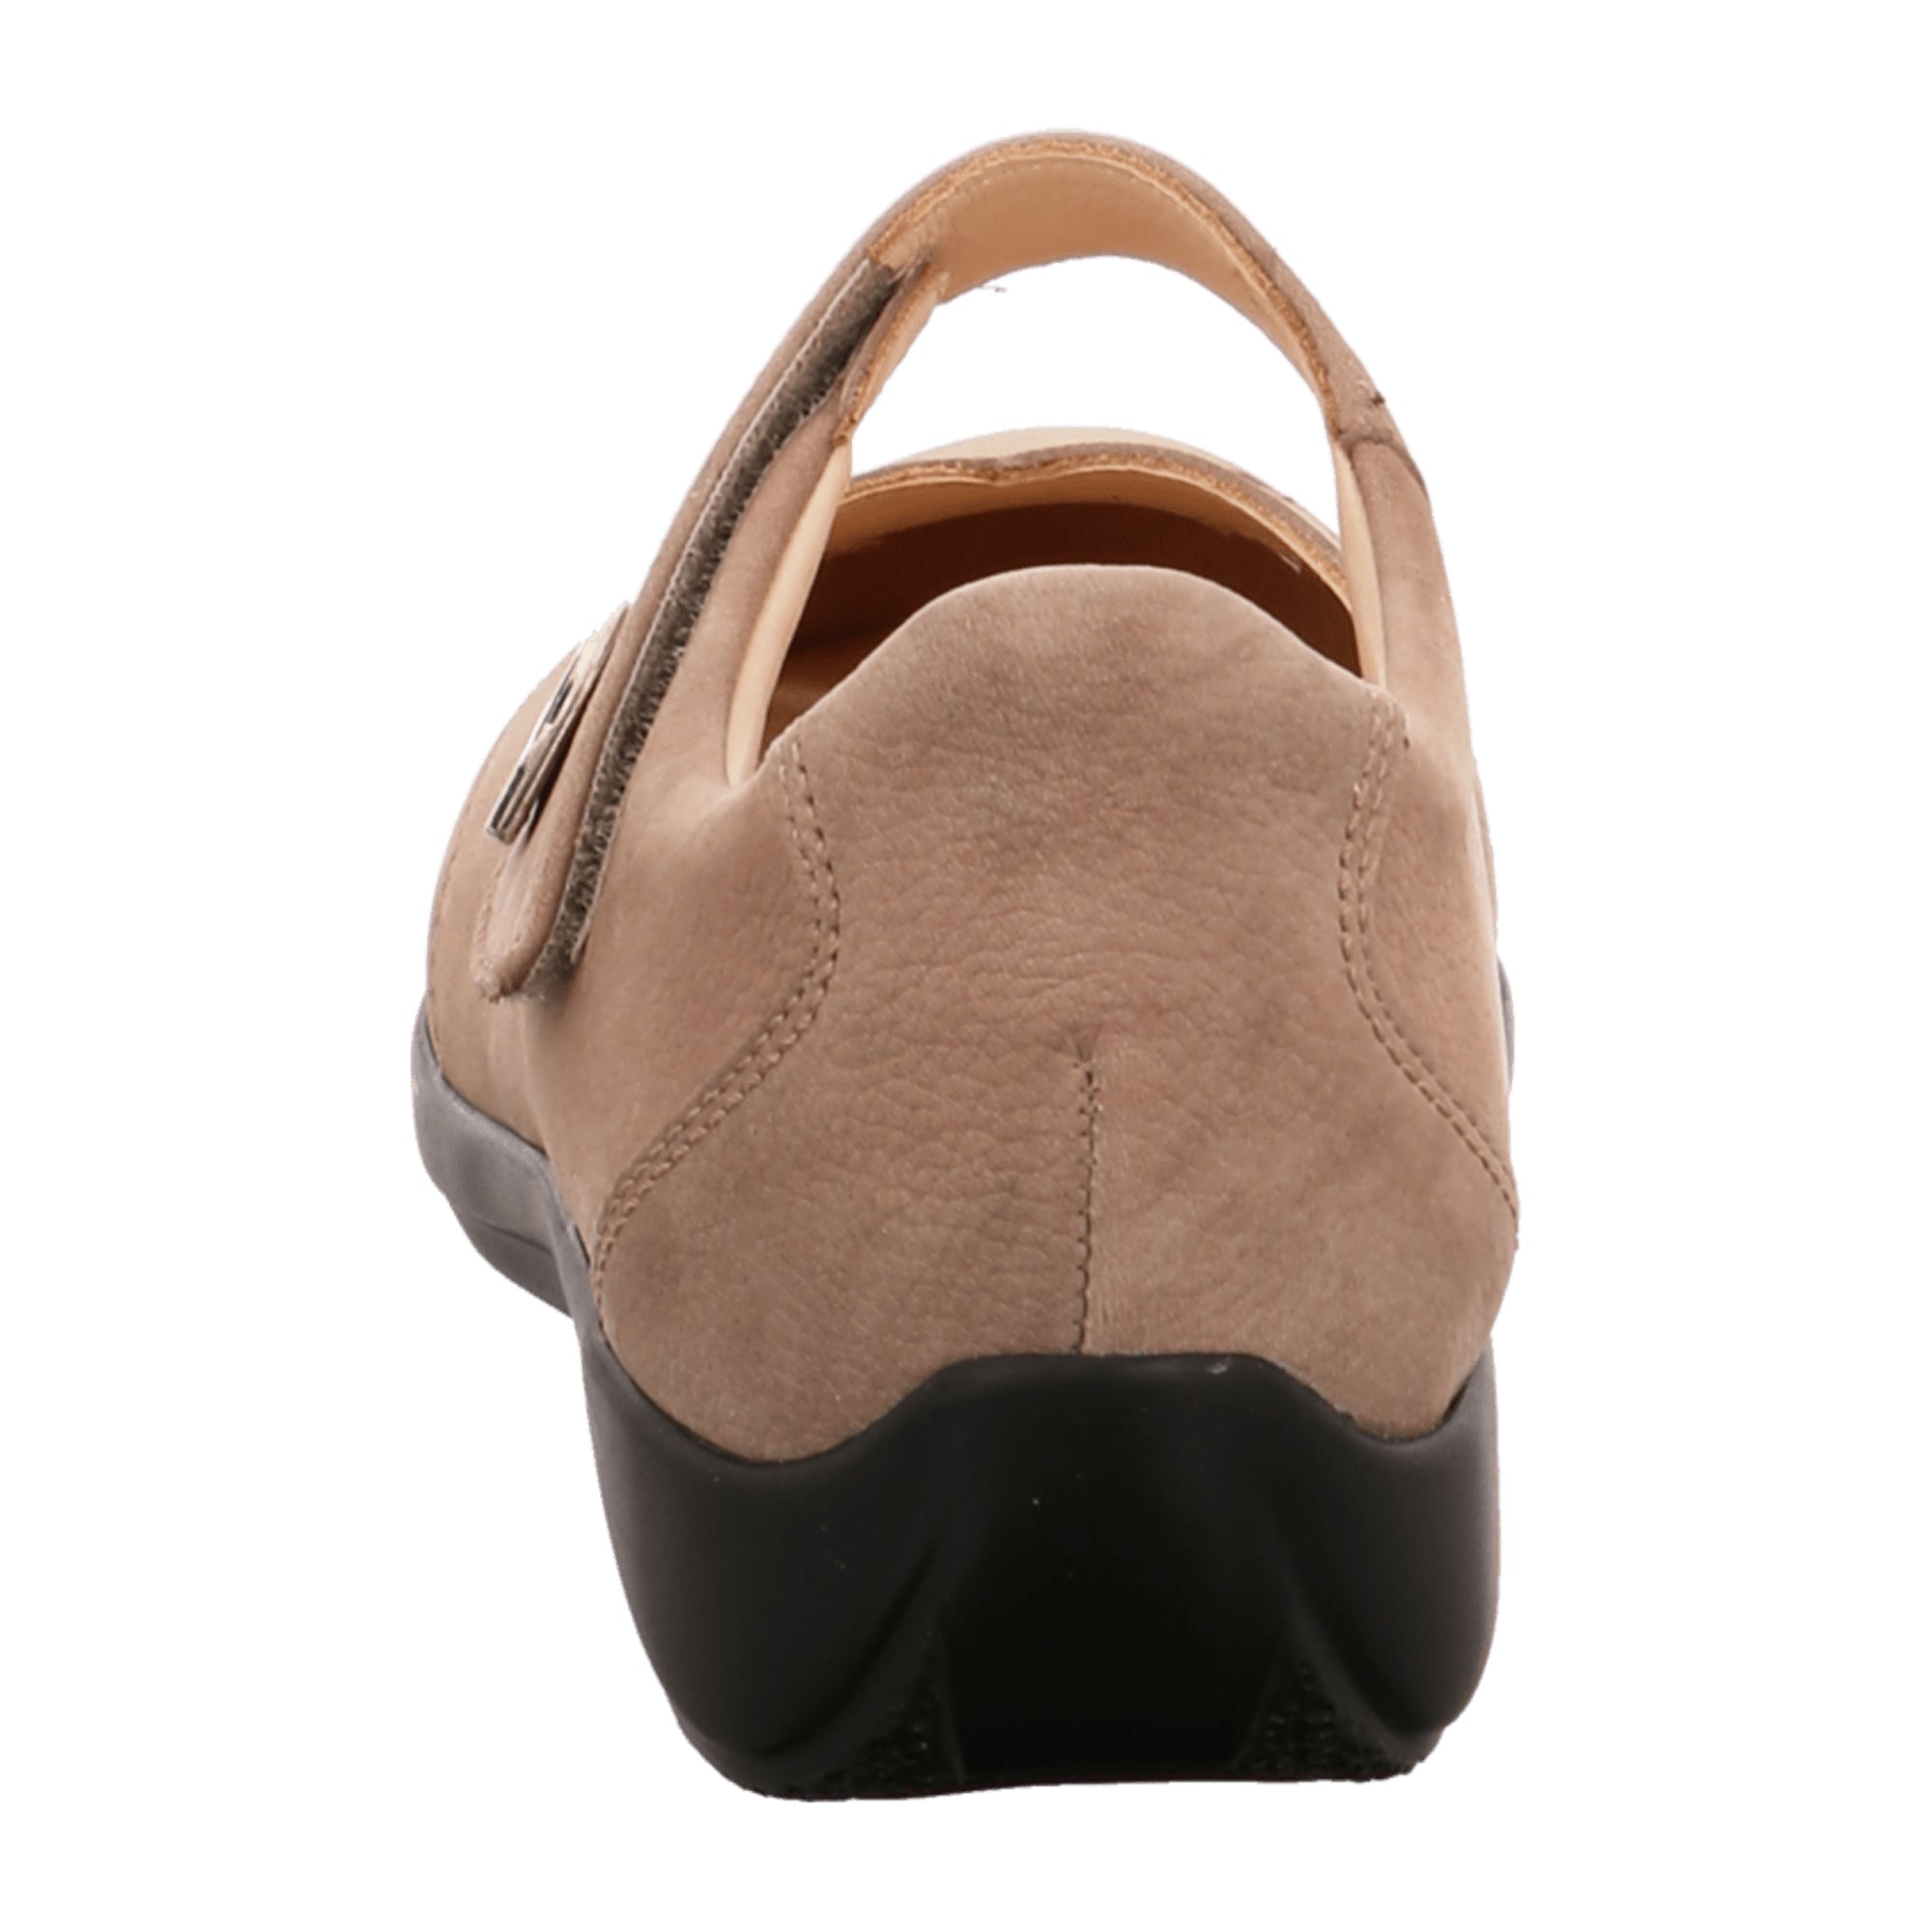 Finn Comfort Brac-S Women's Comfortable Sandals, Beige - Stylish & Durable